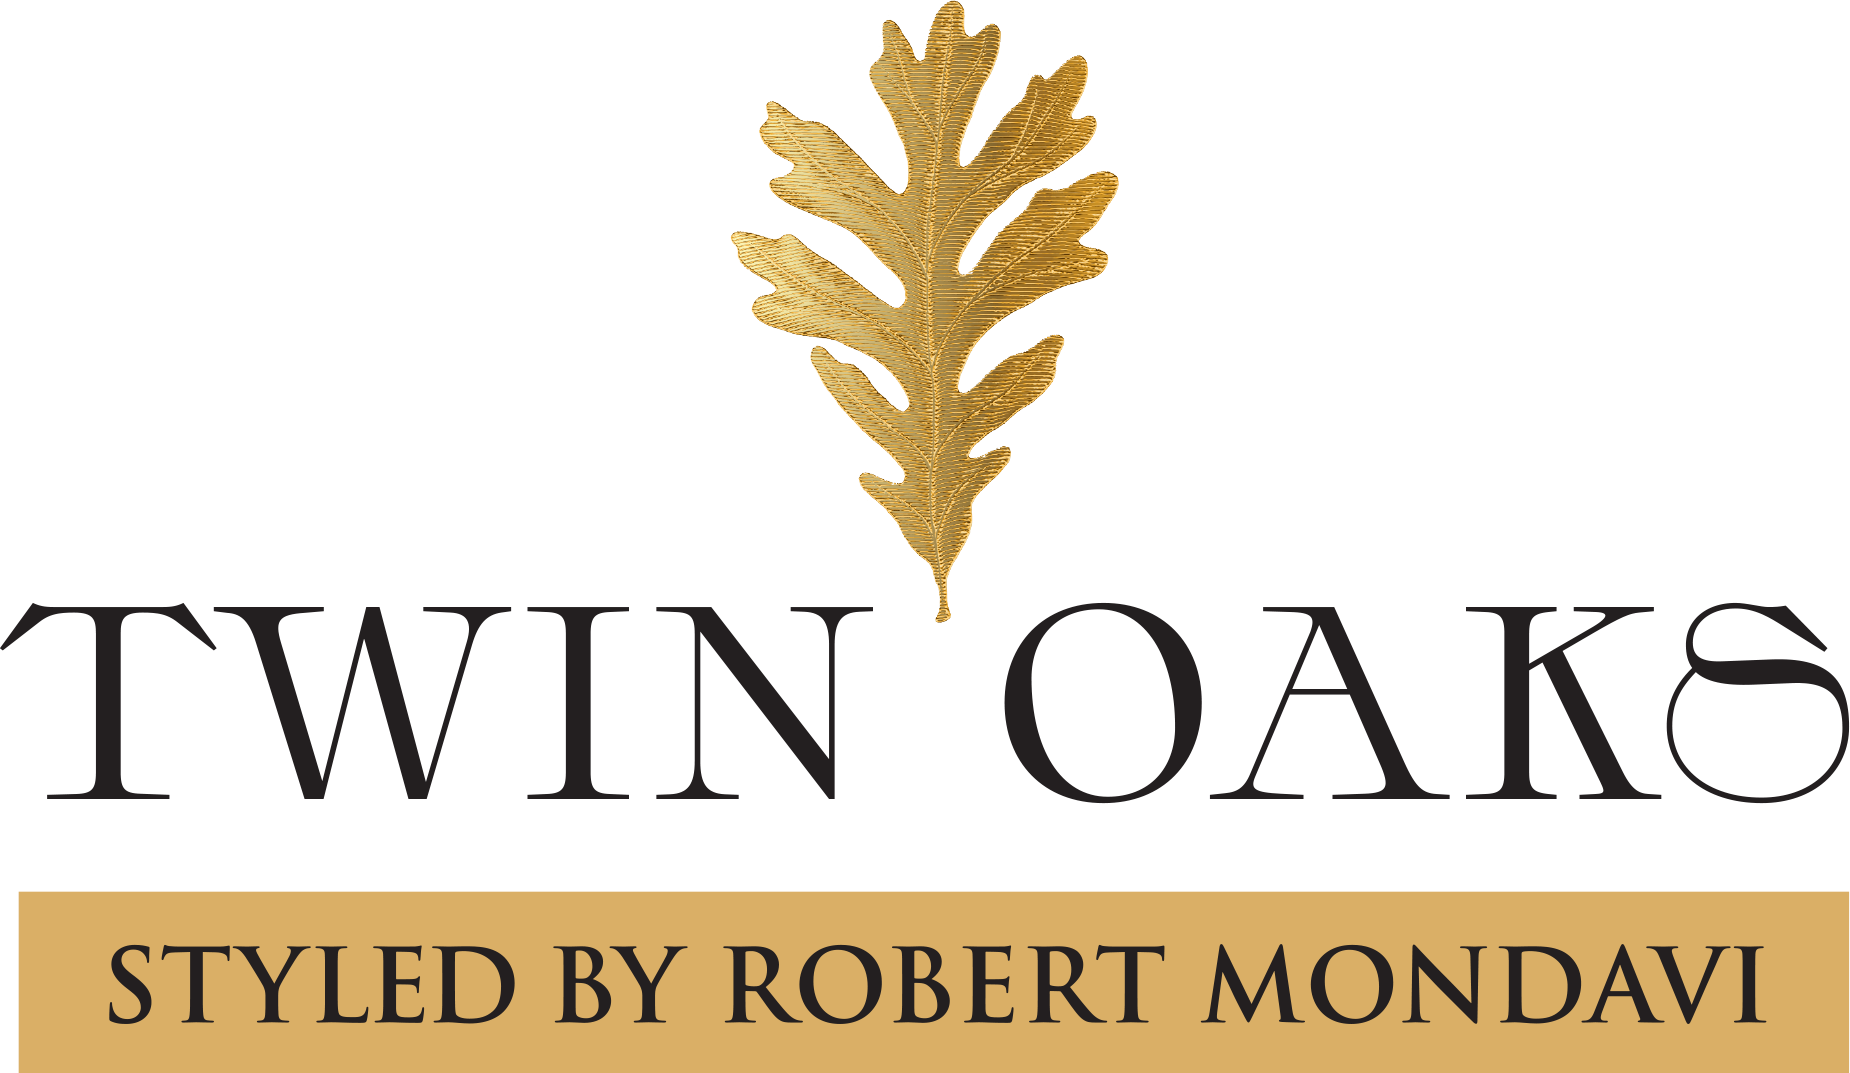 Robert Mondavi Wines